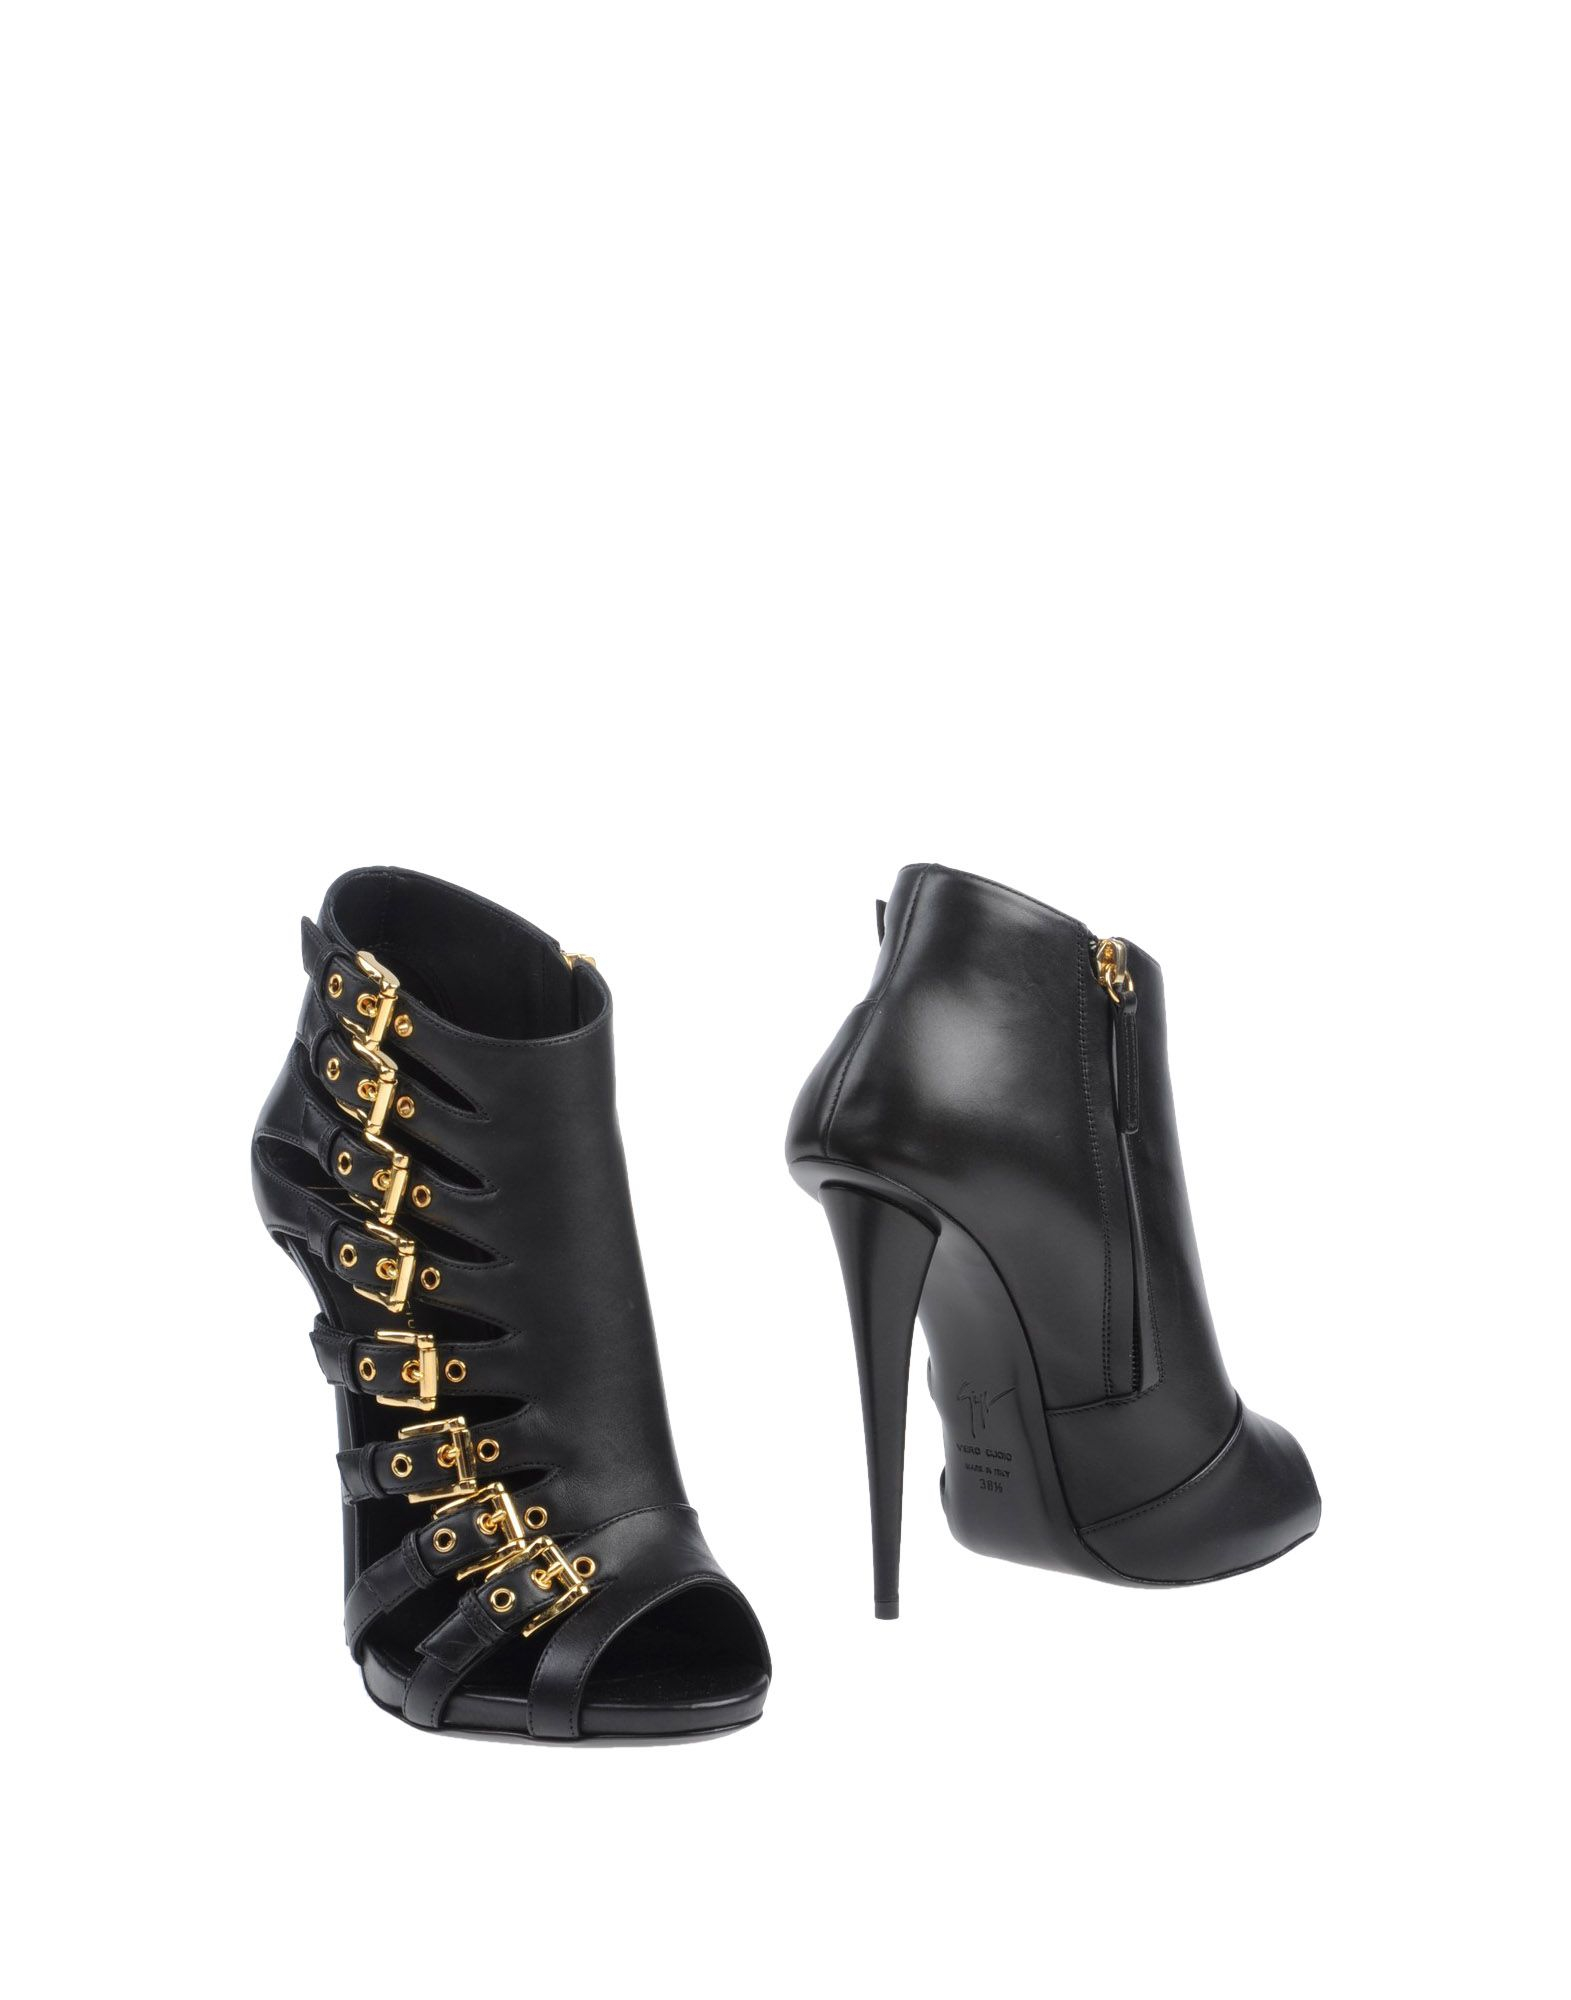 Giuseppe Zanotti Ankle Boots in Black | Lyst